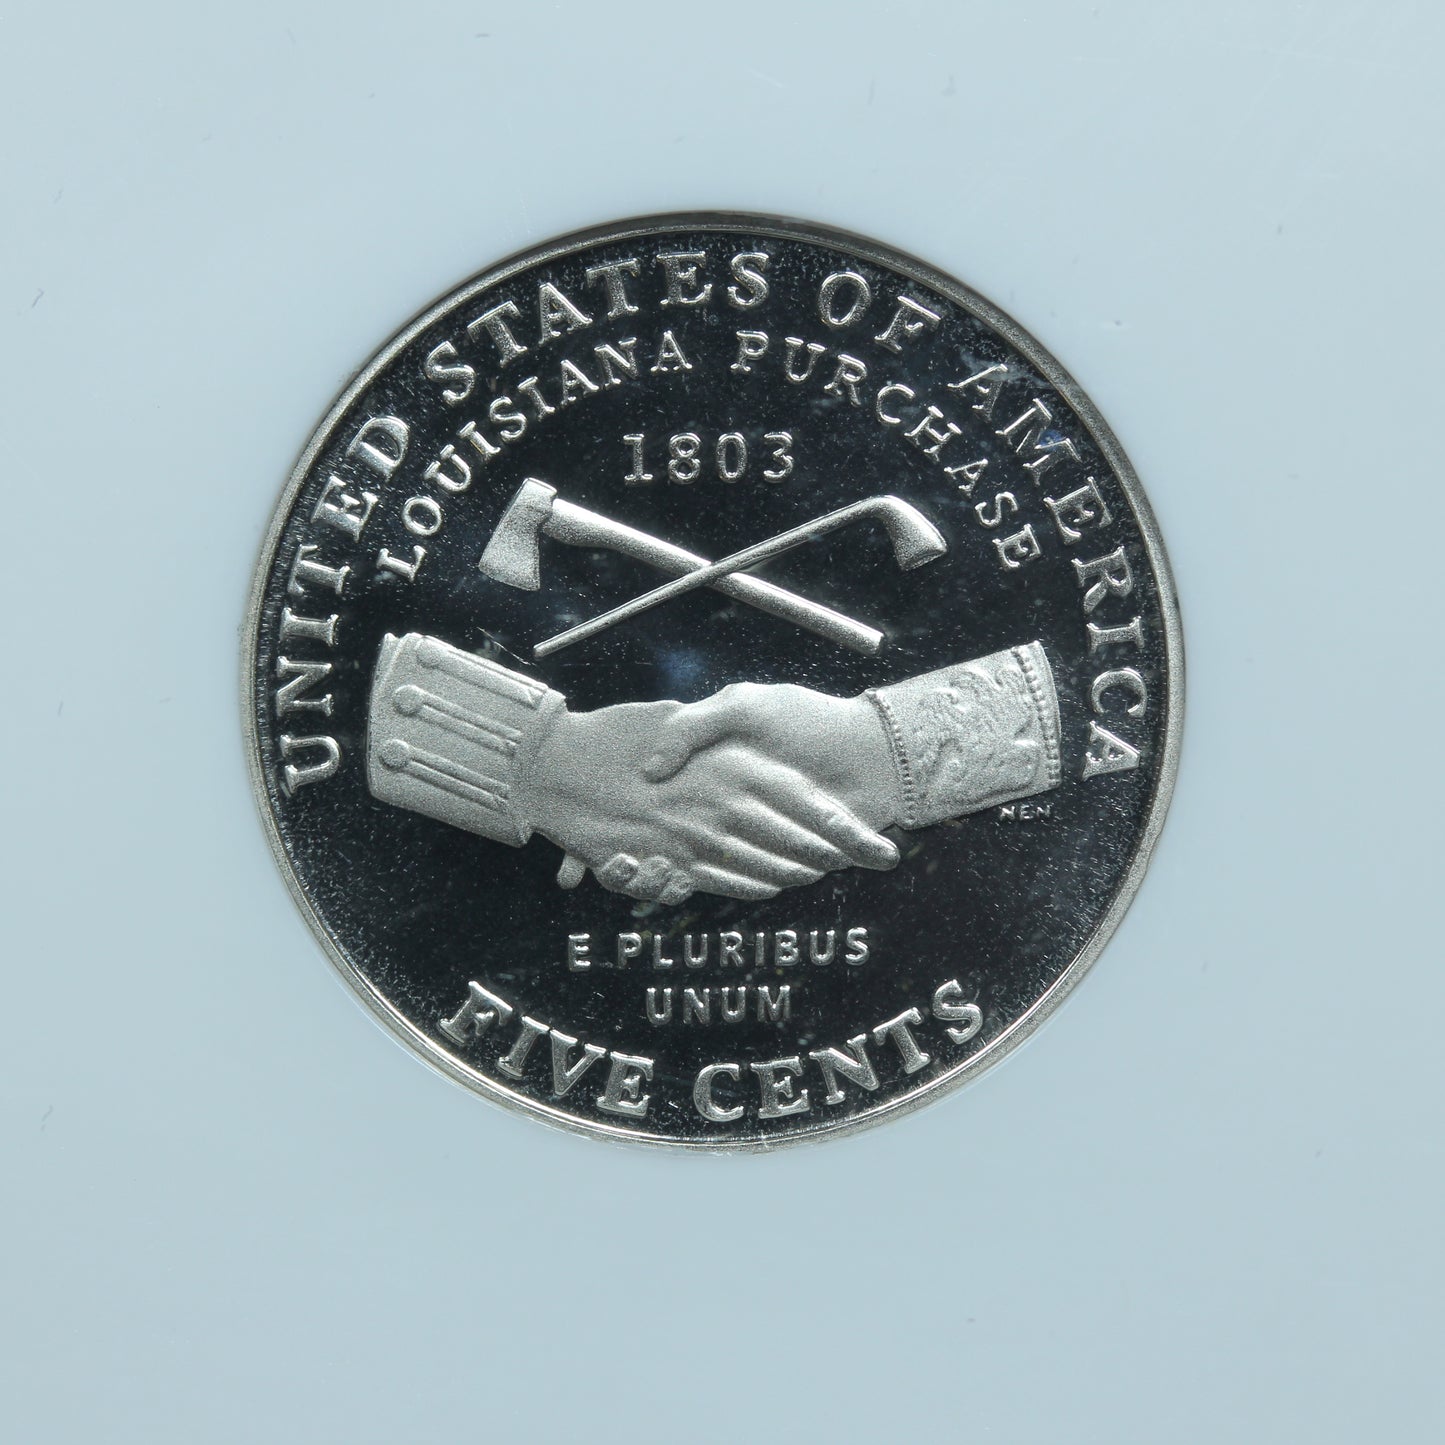 2004 S (San Francisco) 5c Jefferson Nickel Handshake - NGC PF 69 UCAM